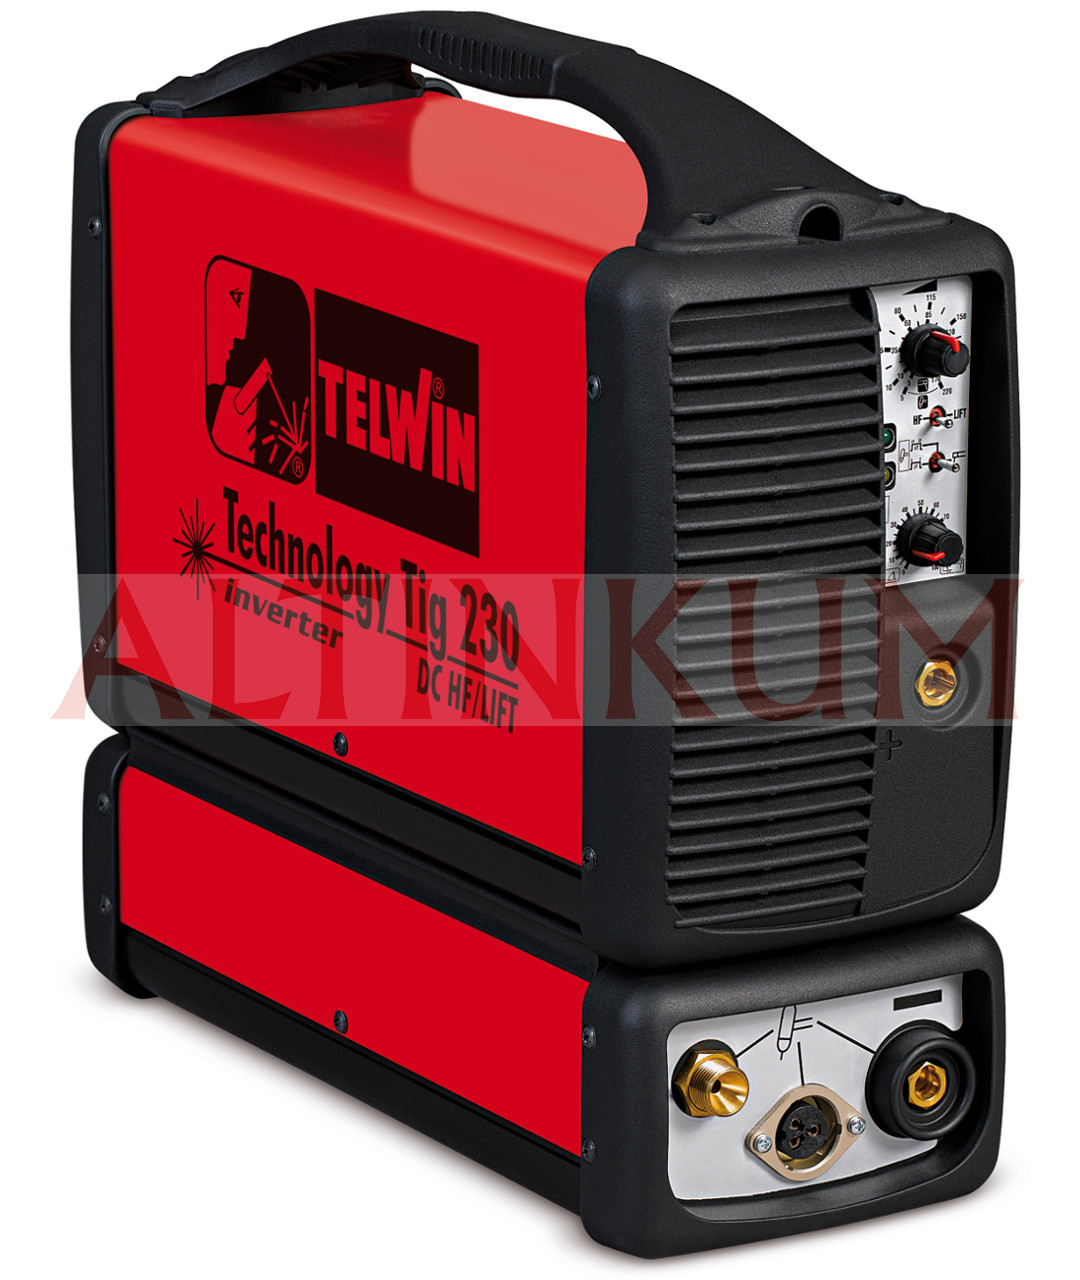 Telwin Technology Tig 230 DC HF/LIFT 220 Amper İnverter Kaynak Makinası